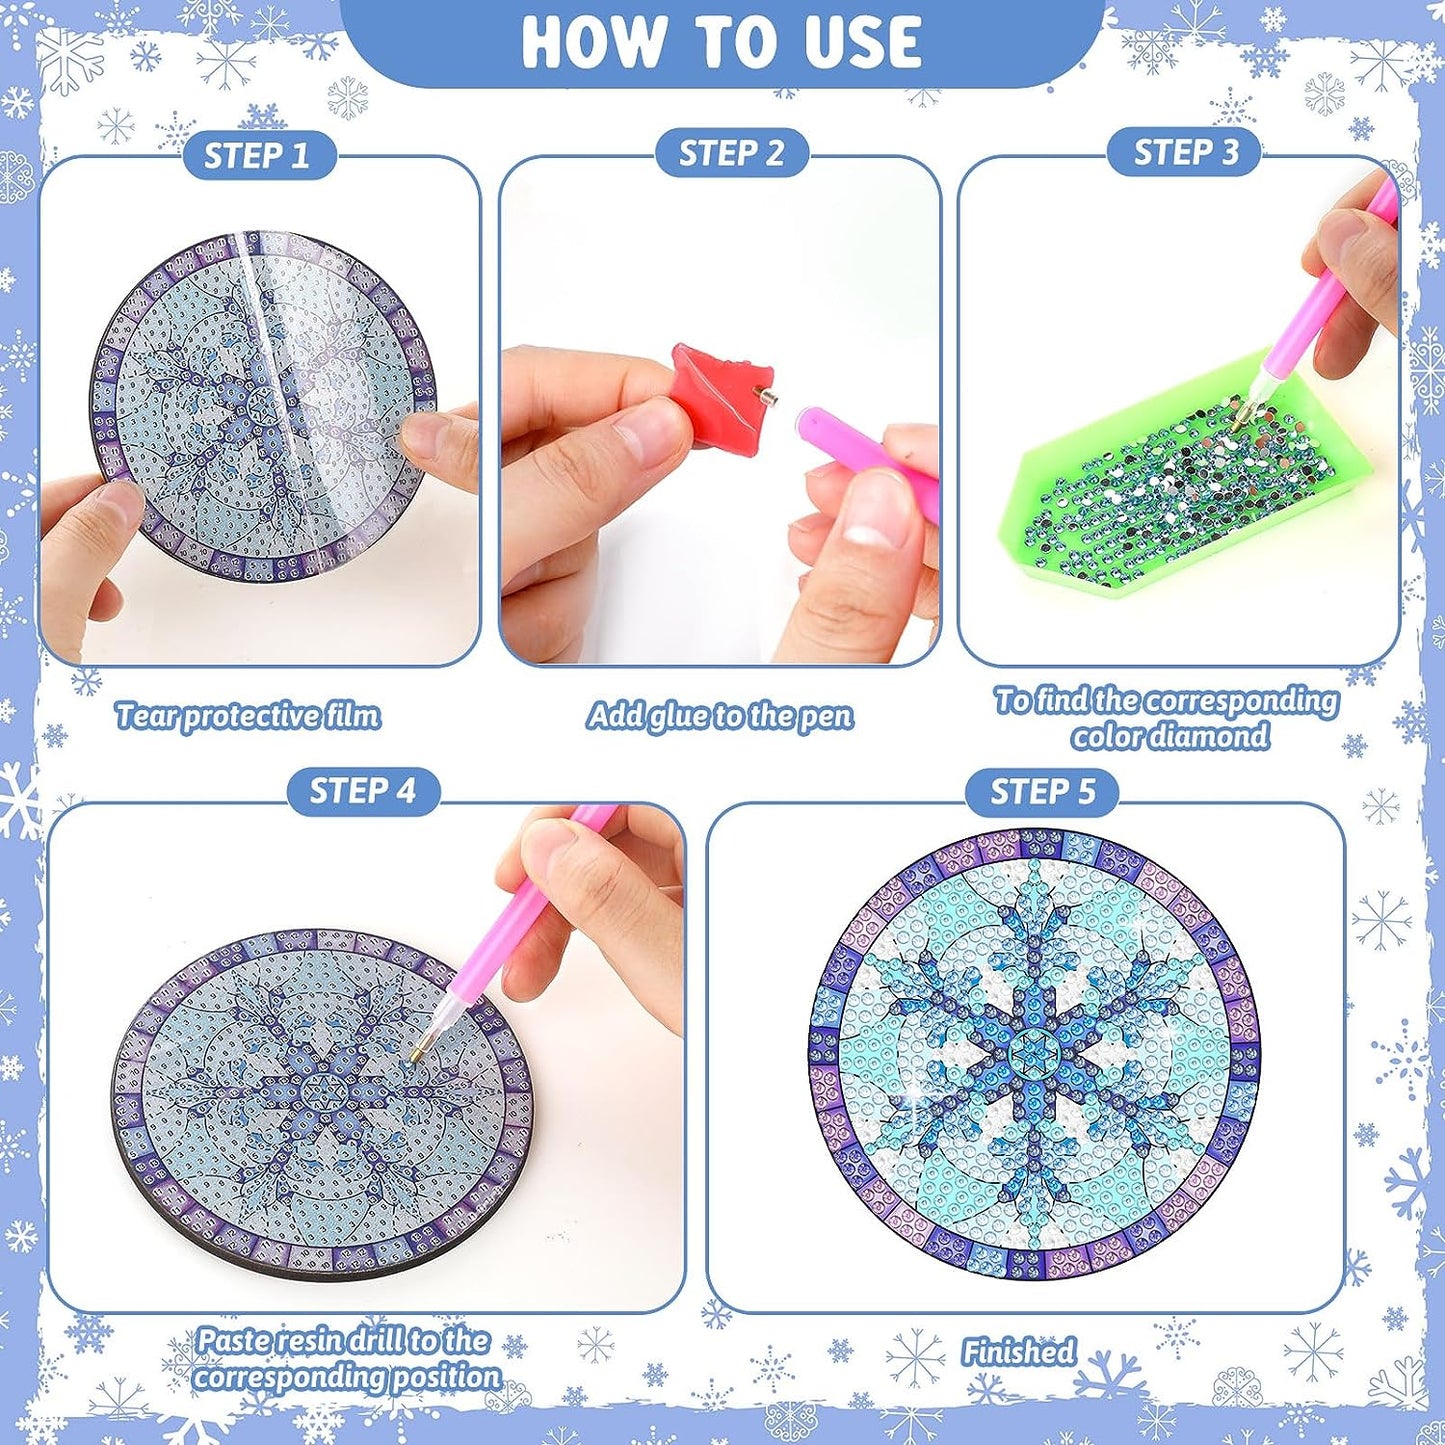 8 pcs set DIY Special Shaped Diamond Painting Coaster  | mandala(no holder)